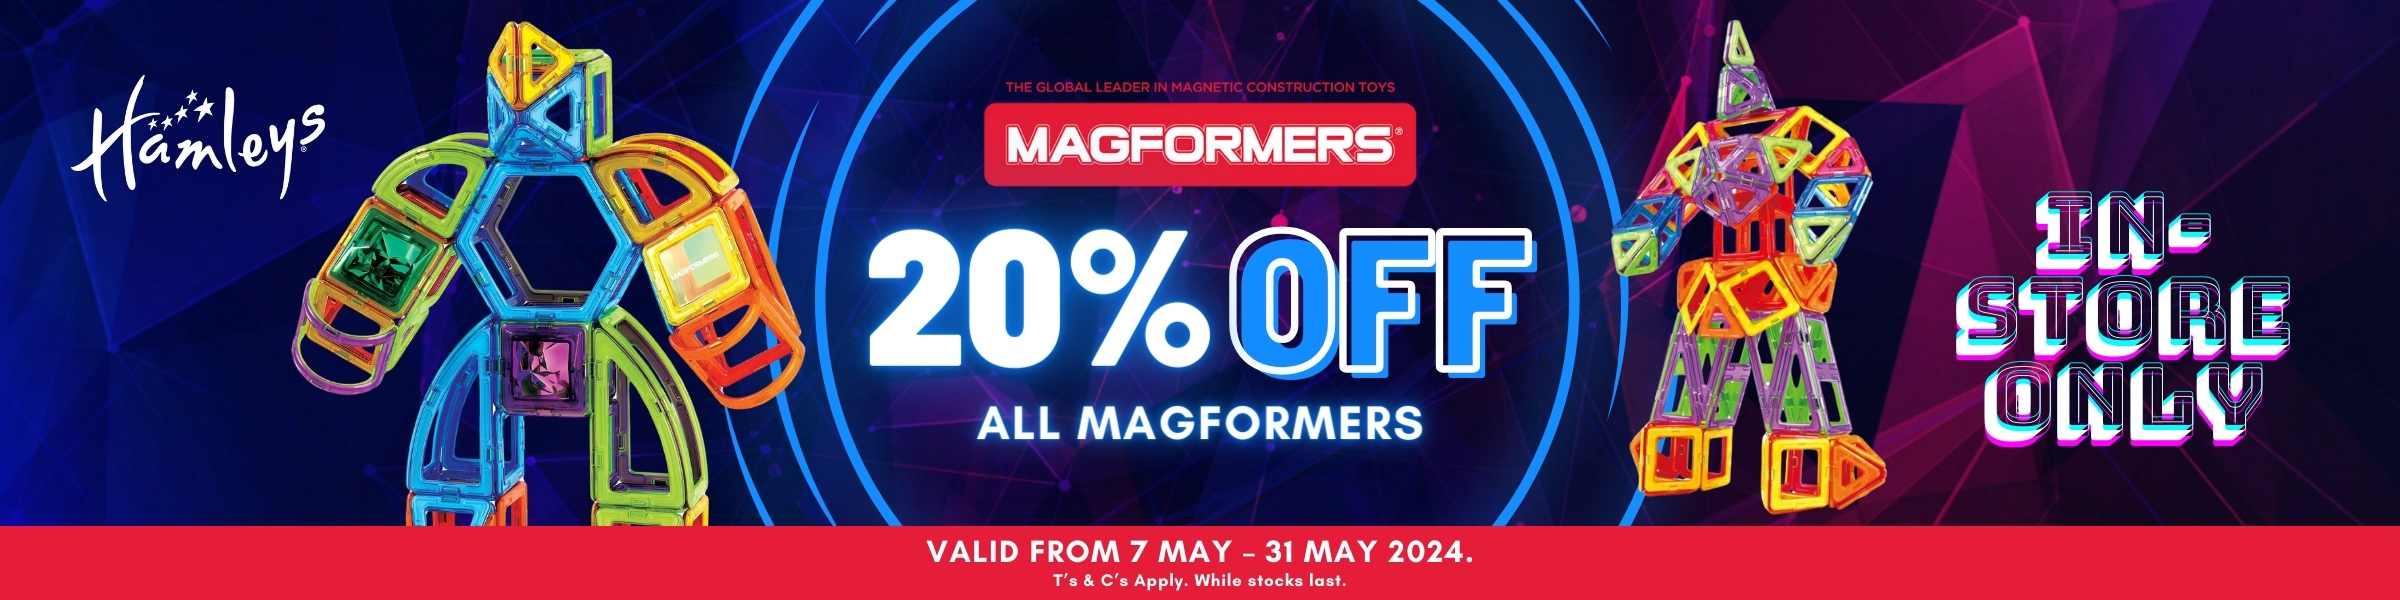 Hamleys-Magformers Promo-Web Banner